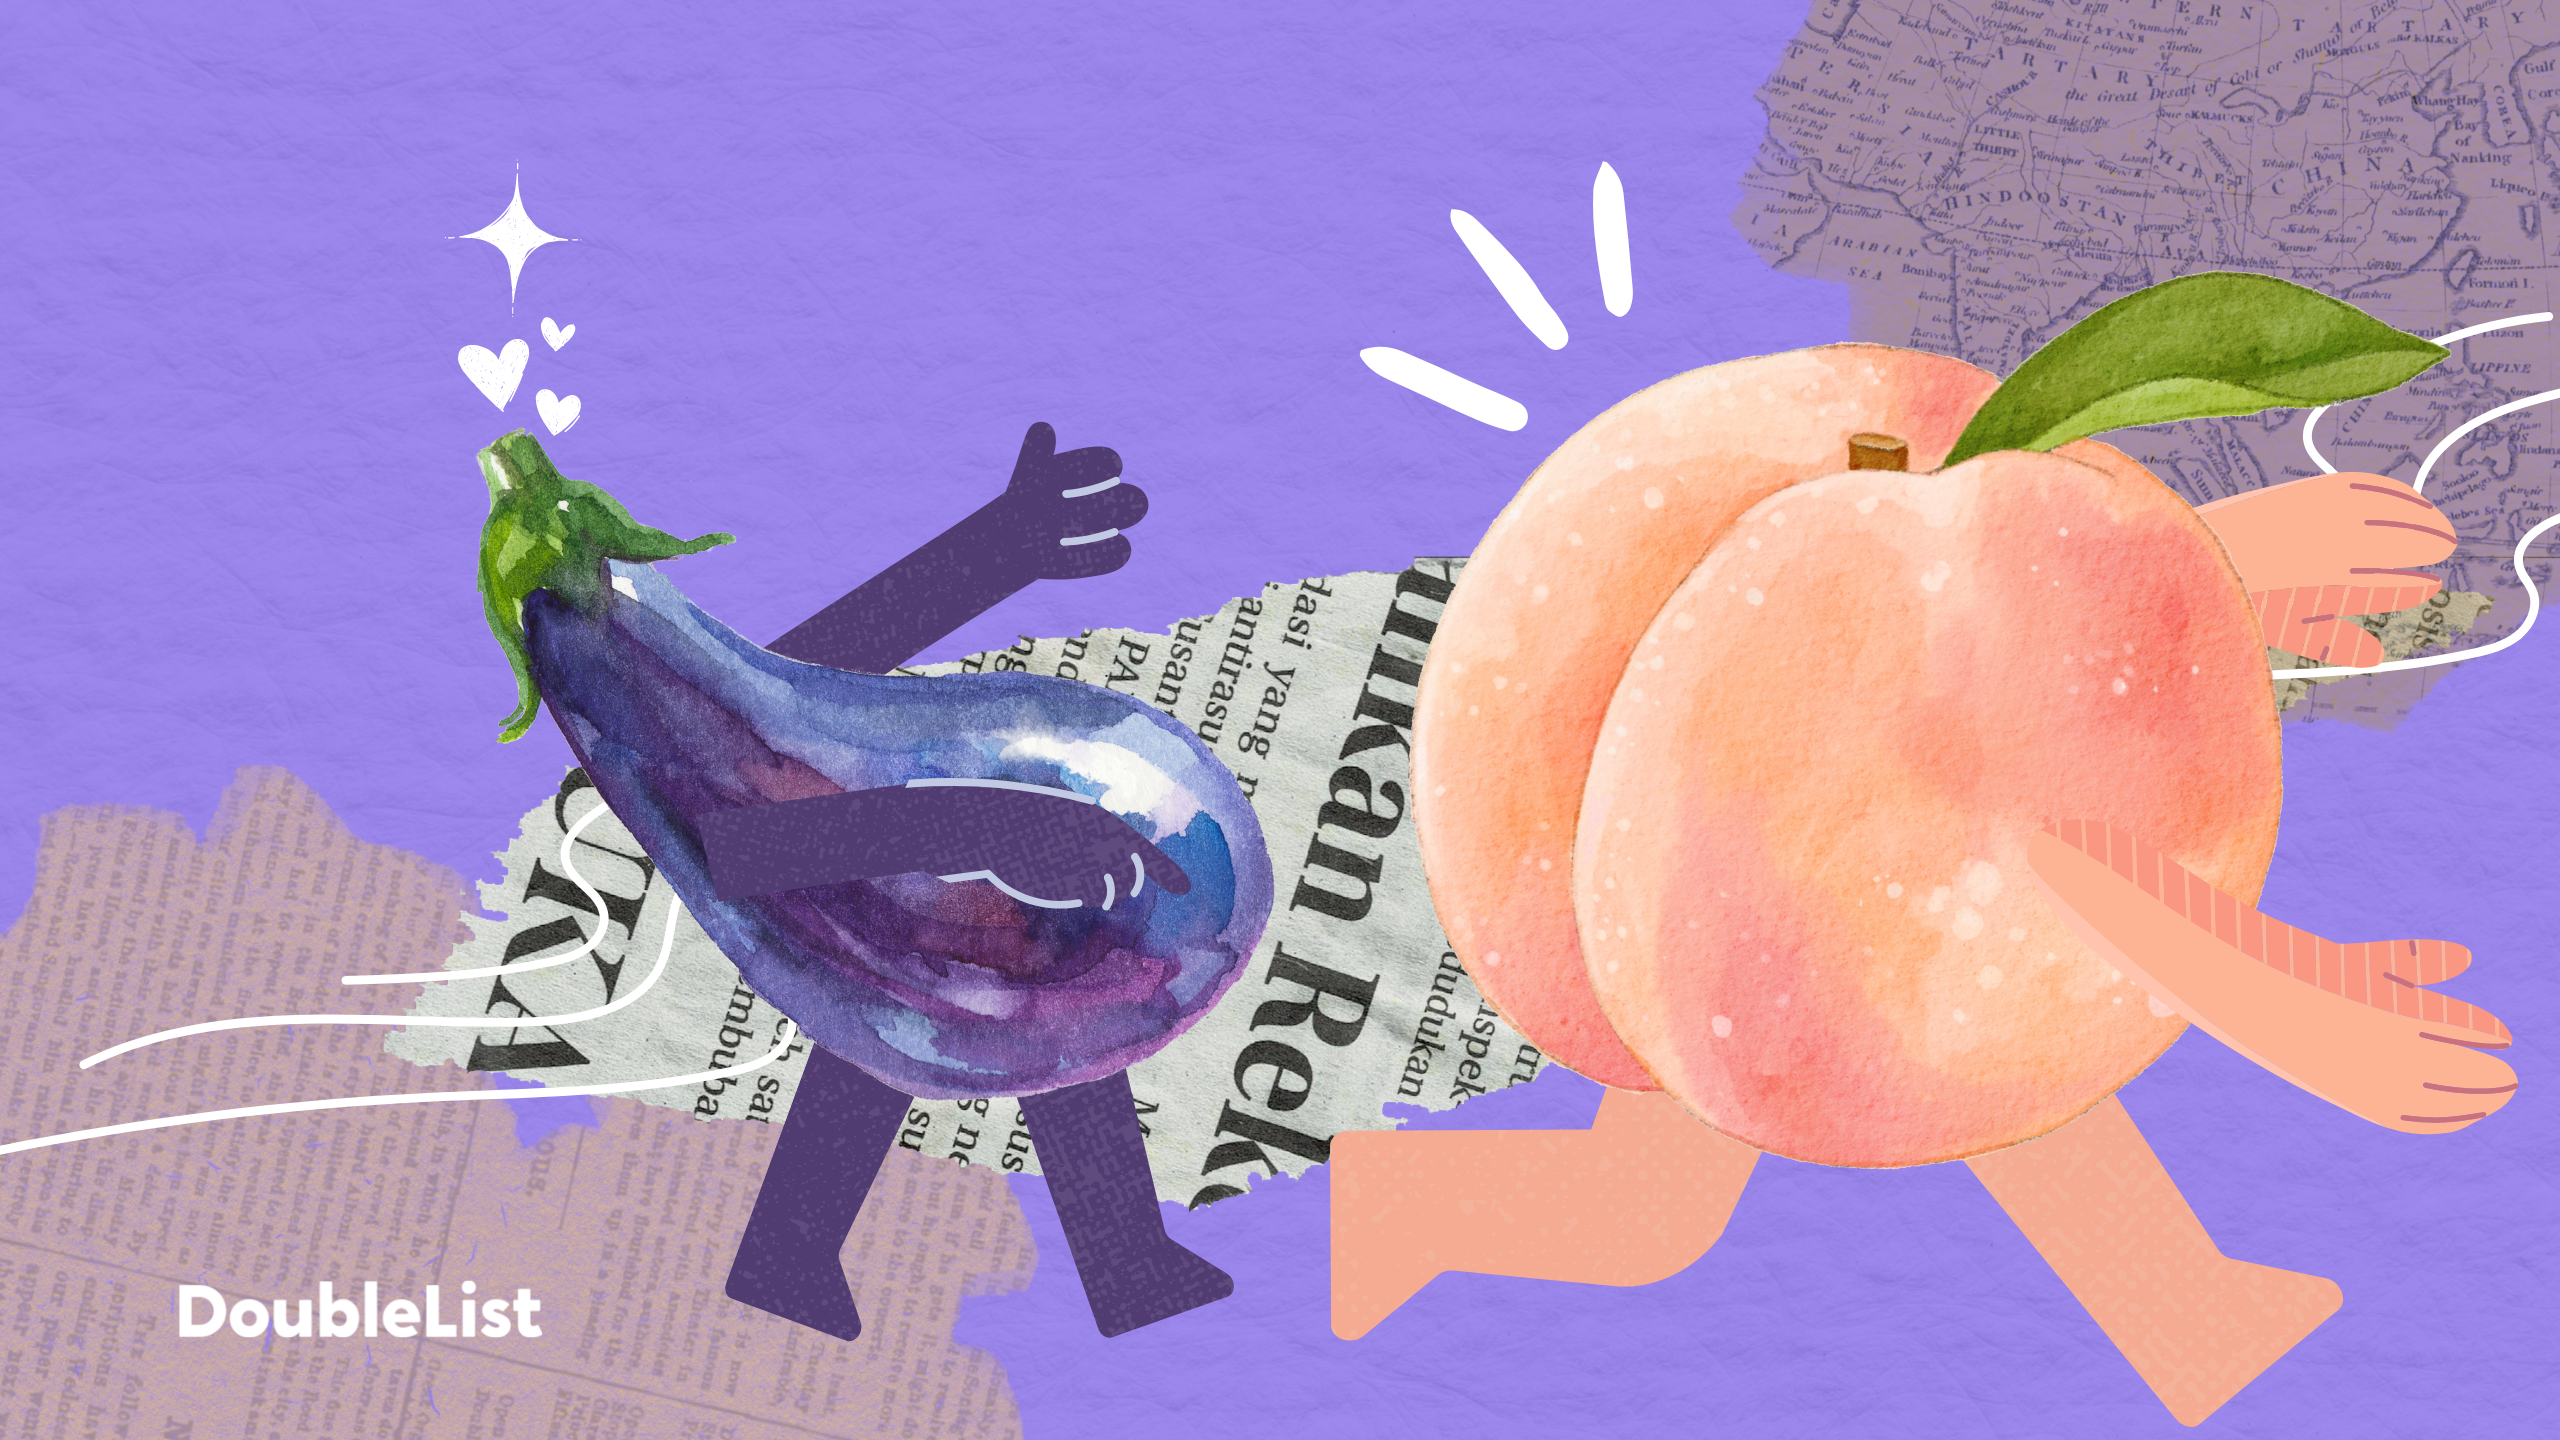 Eggplant chasing a peach